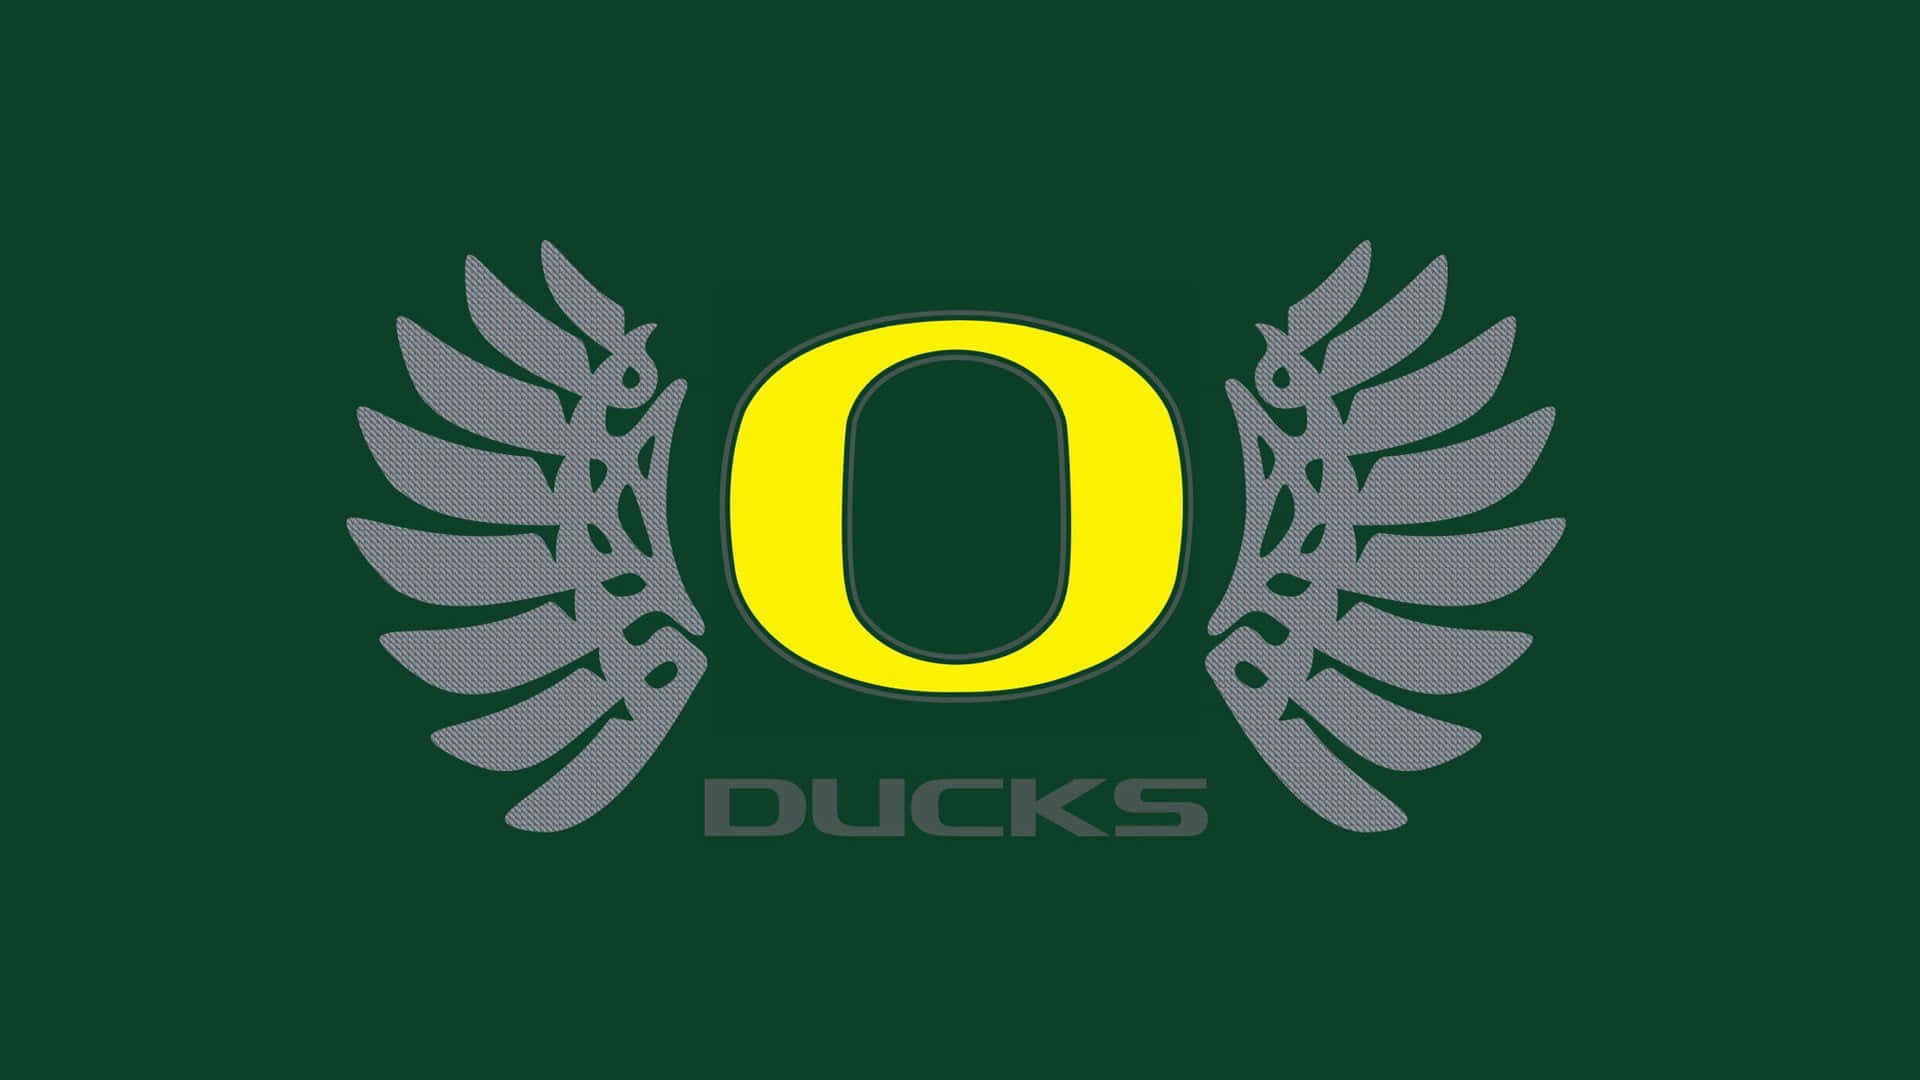 Oregon Ducks Football Team In Action